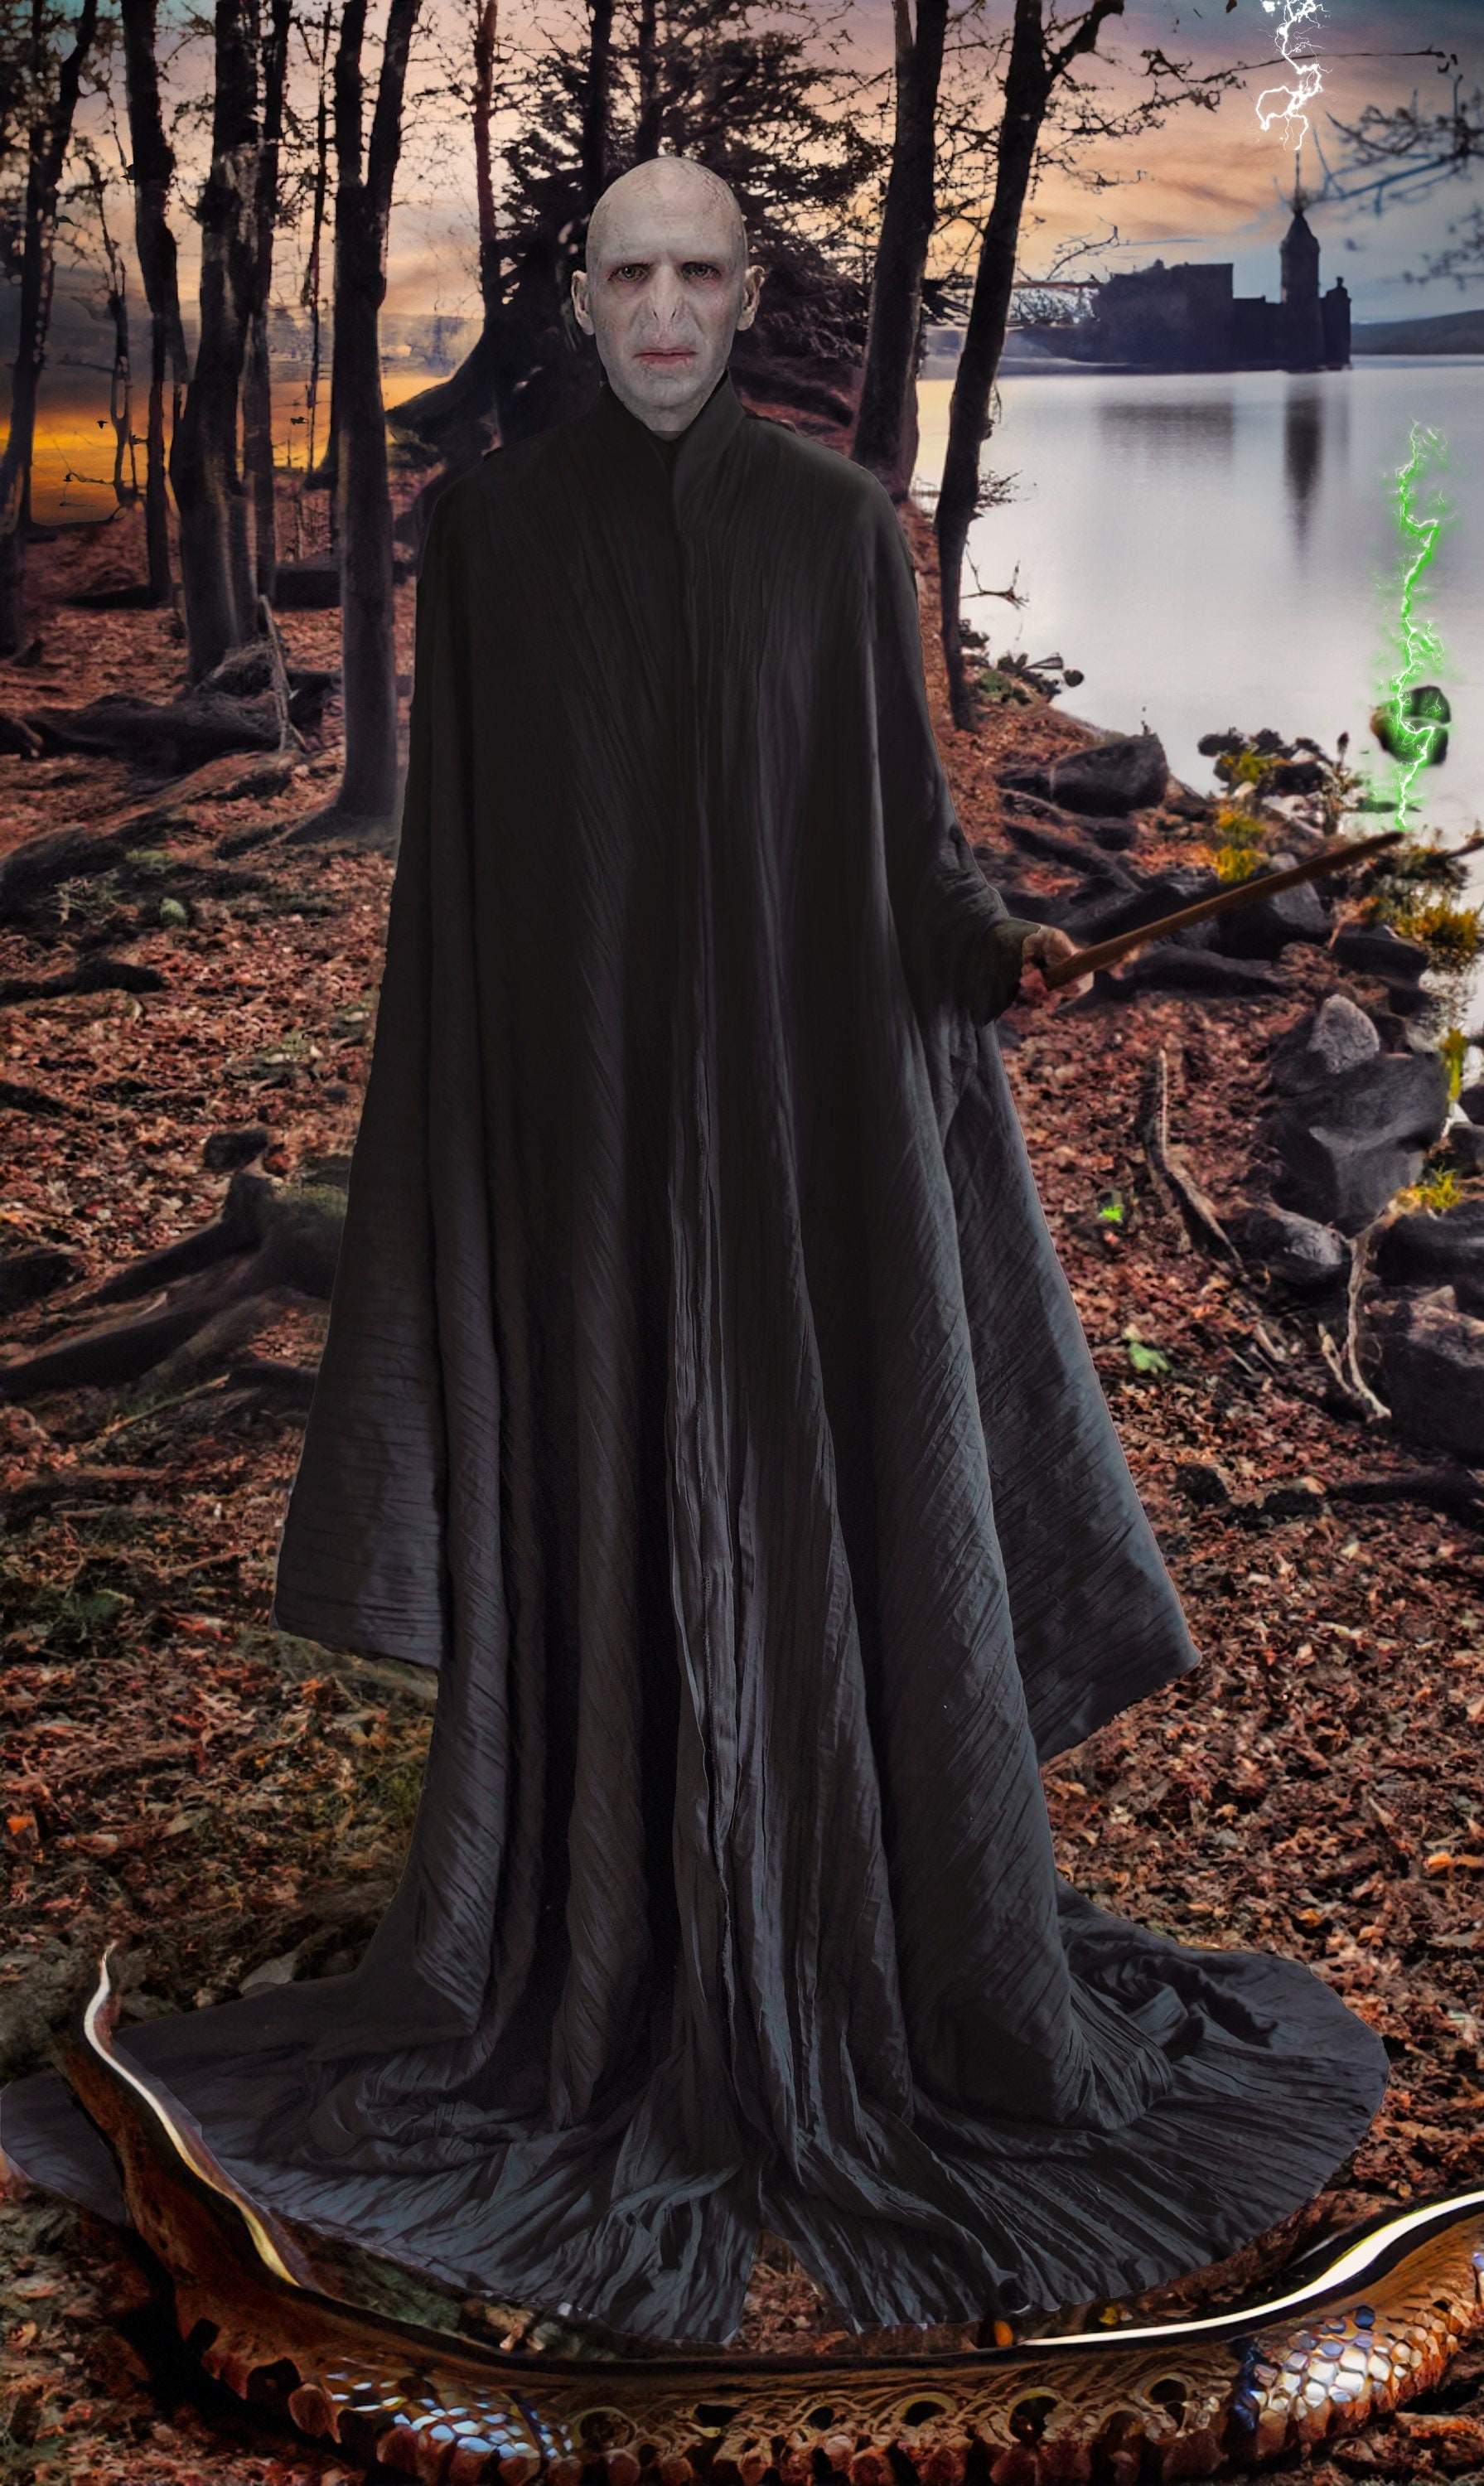 Girls Women Slytherin Ravenclaw Robe Cloak Wizard House Potters Costume  Magic School Scarf Tie Wand Halloween Costumm Configure. - AliExpress